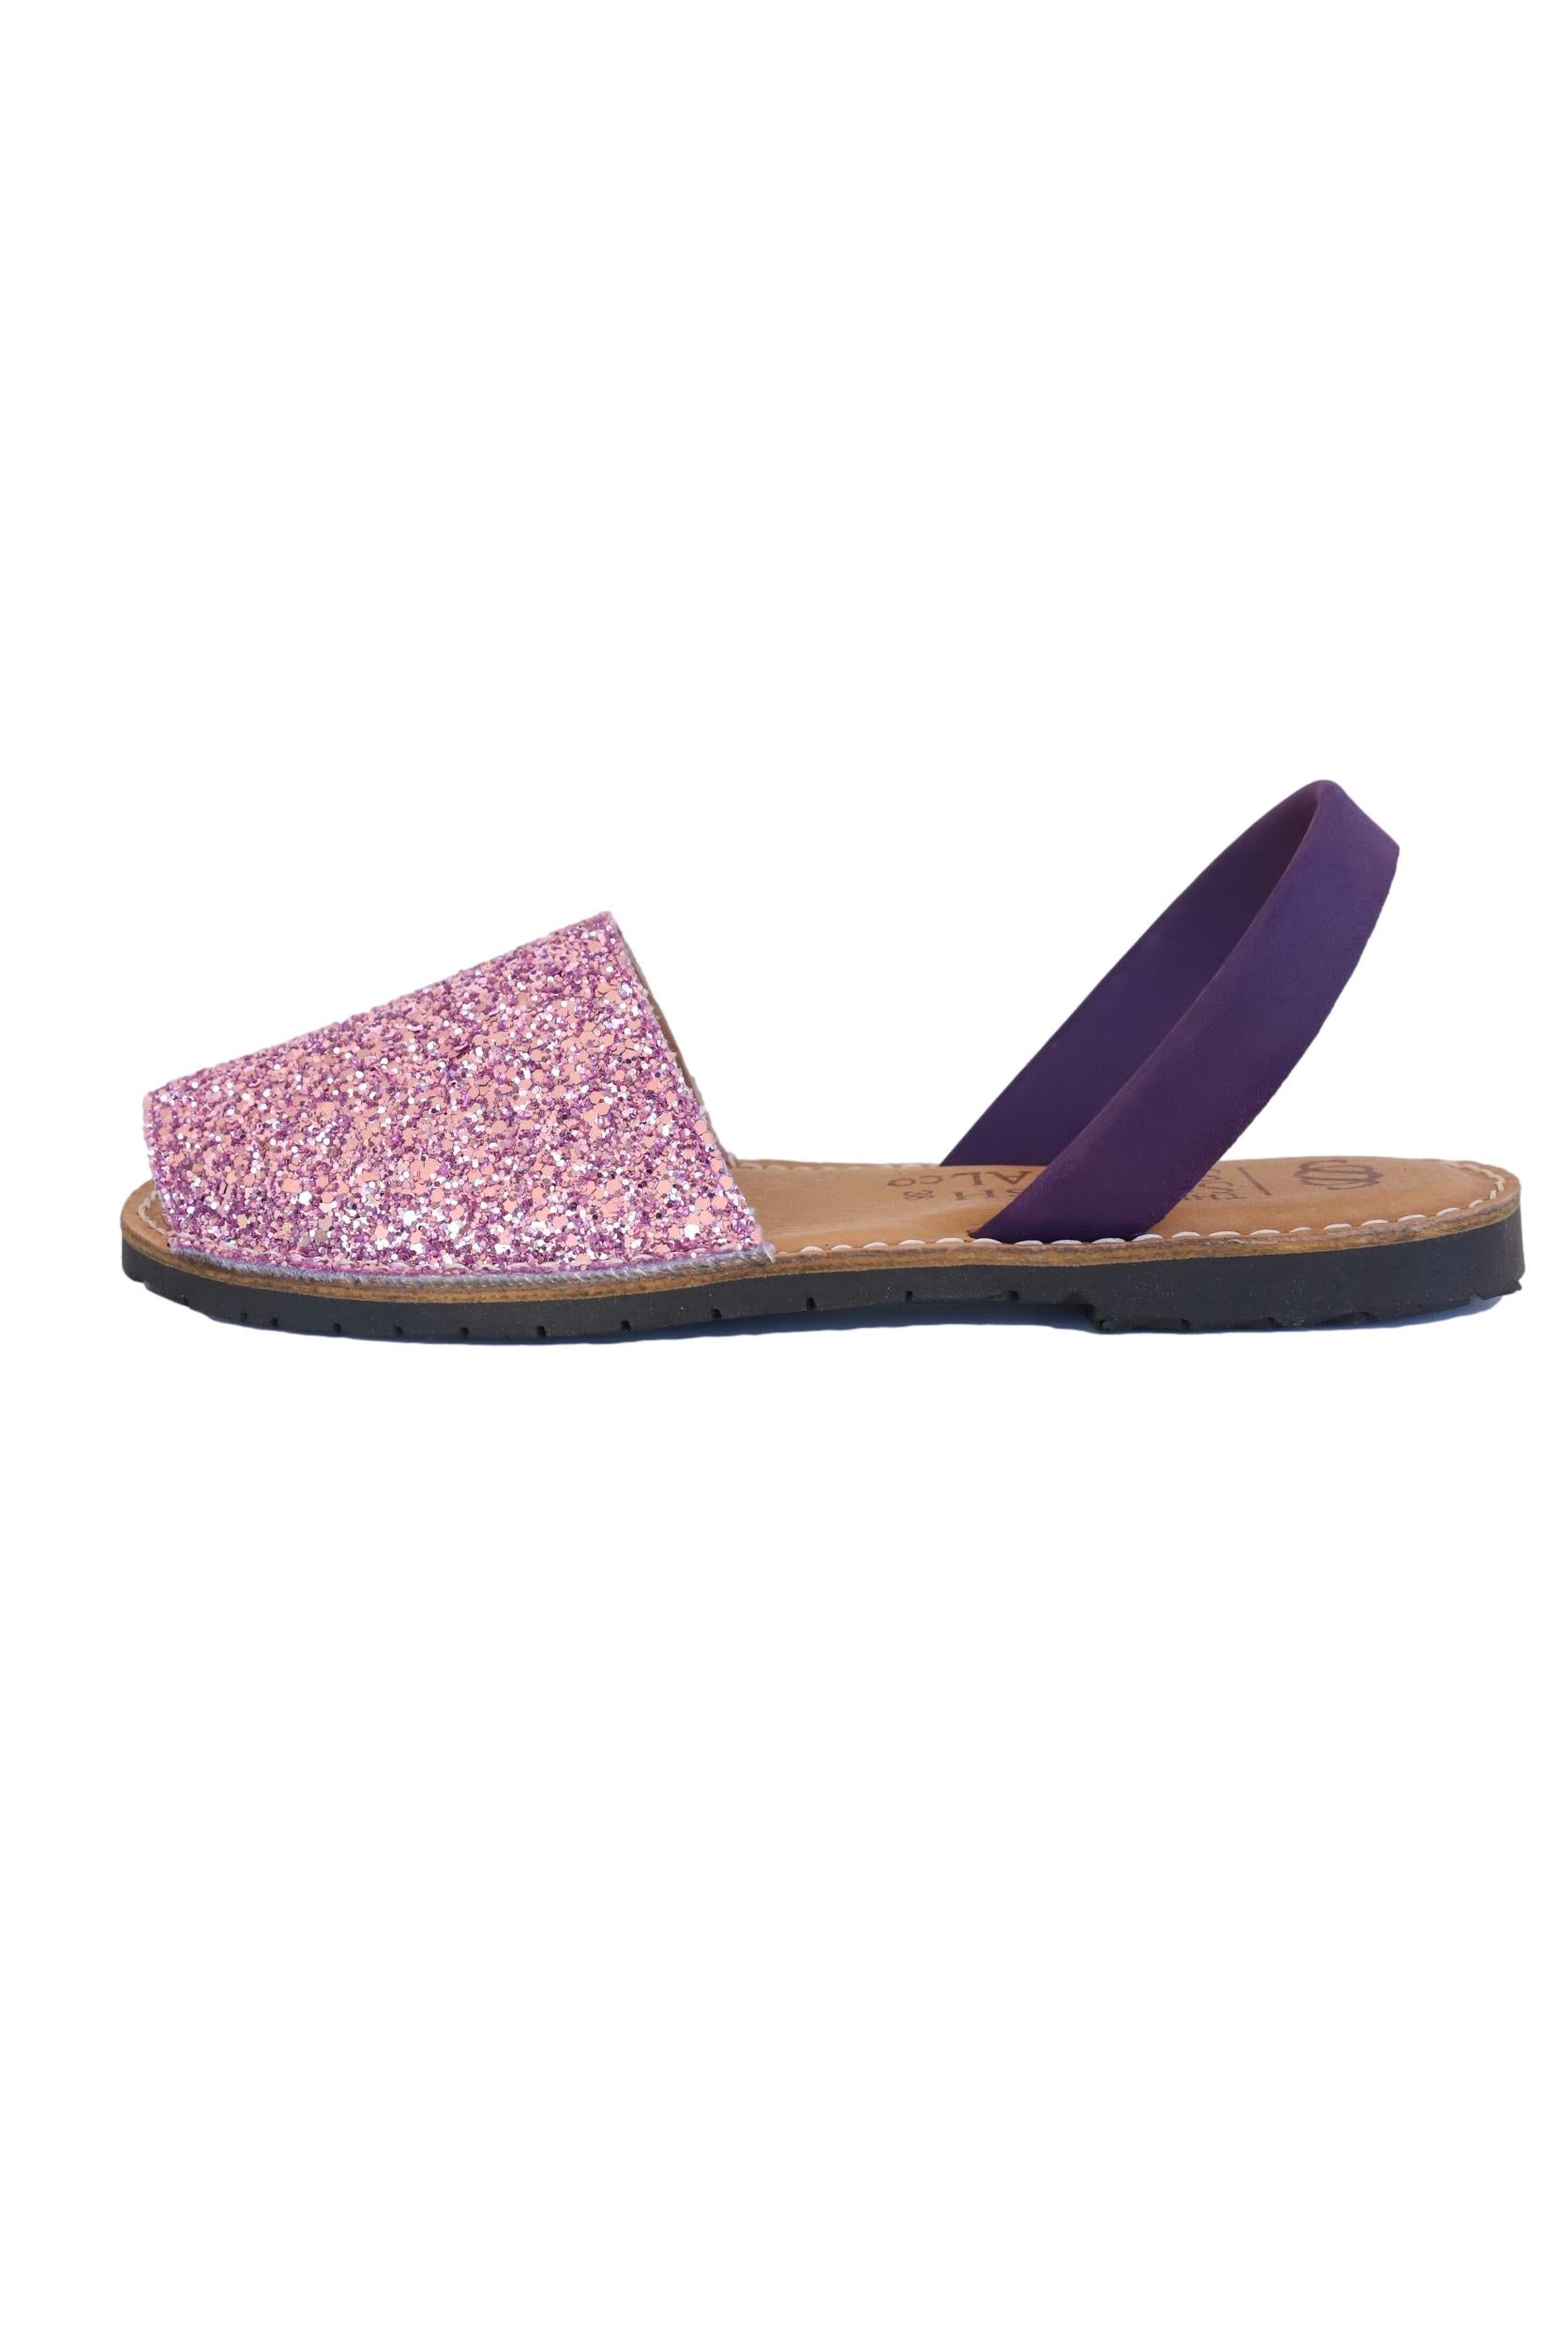 Pink Sparkly sandals